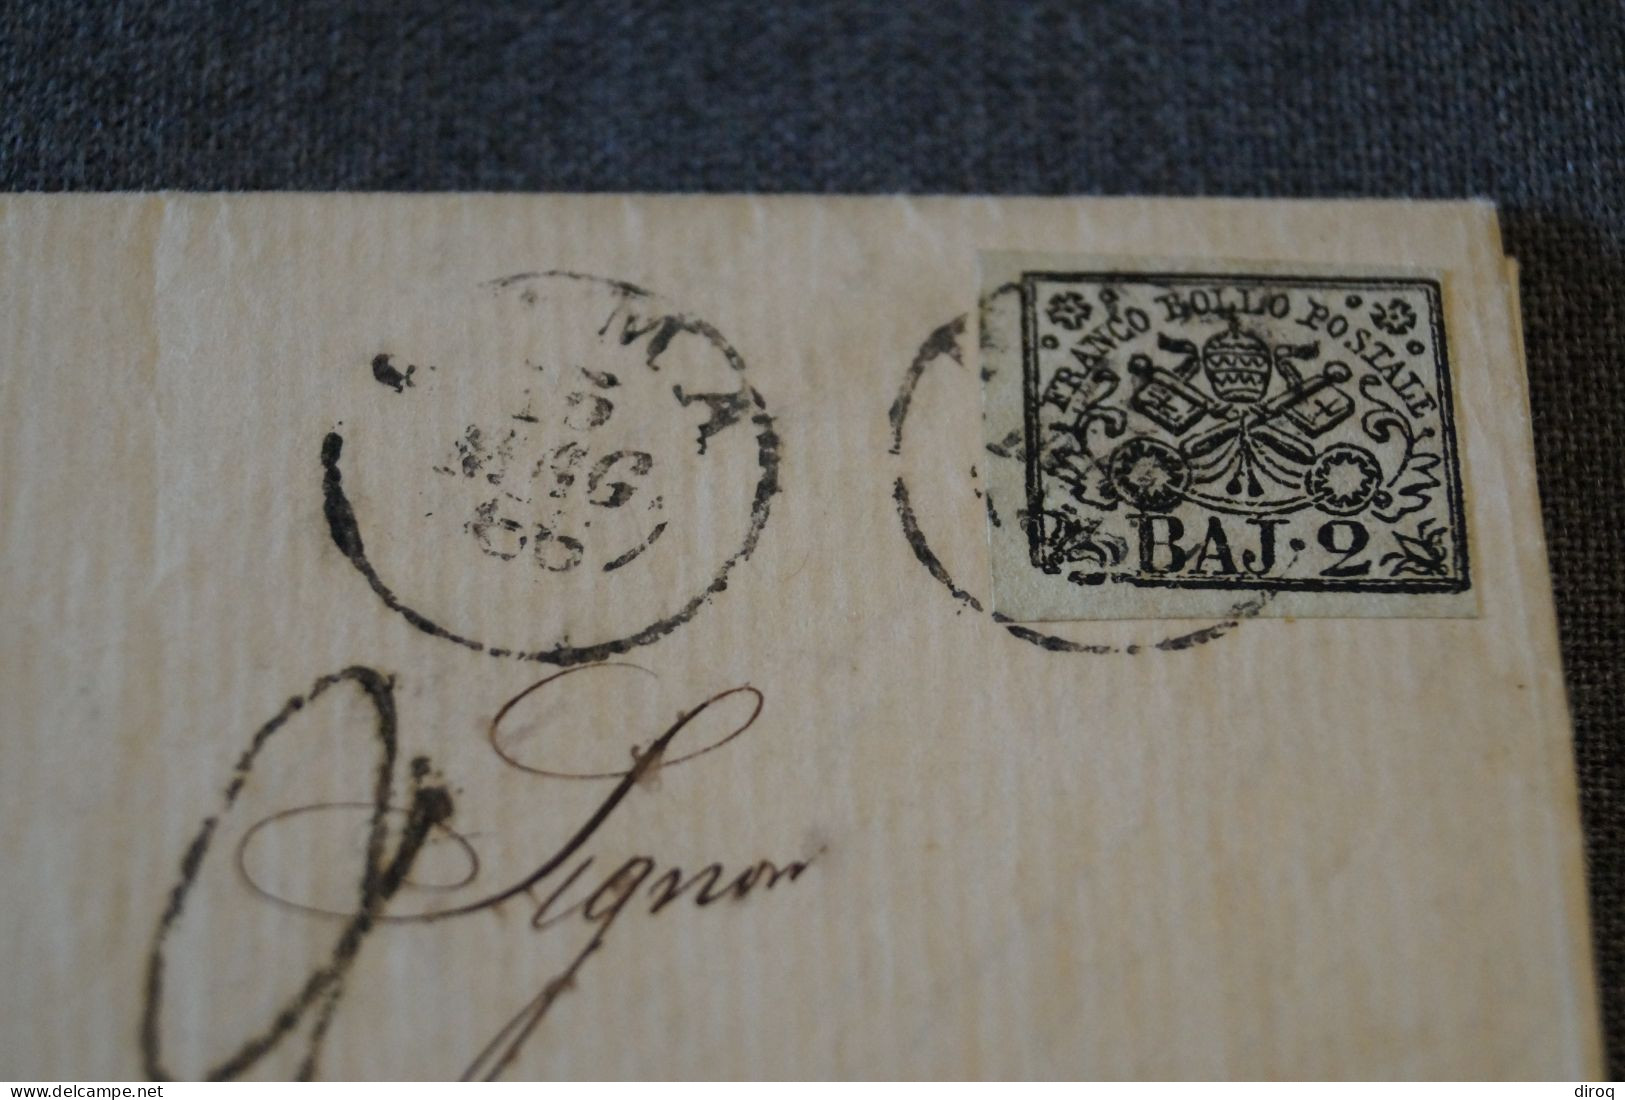 Ancien Envoi Franco Bollo Postale BAJ-2, Italia 1866,courrier à Identifier,pour Collection - Stato Pontificio